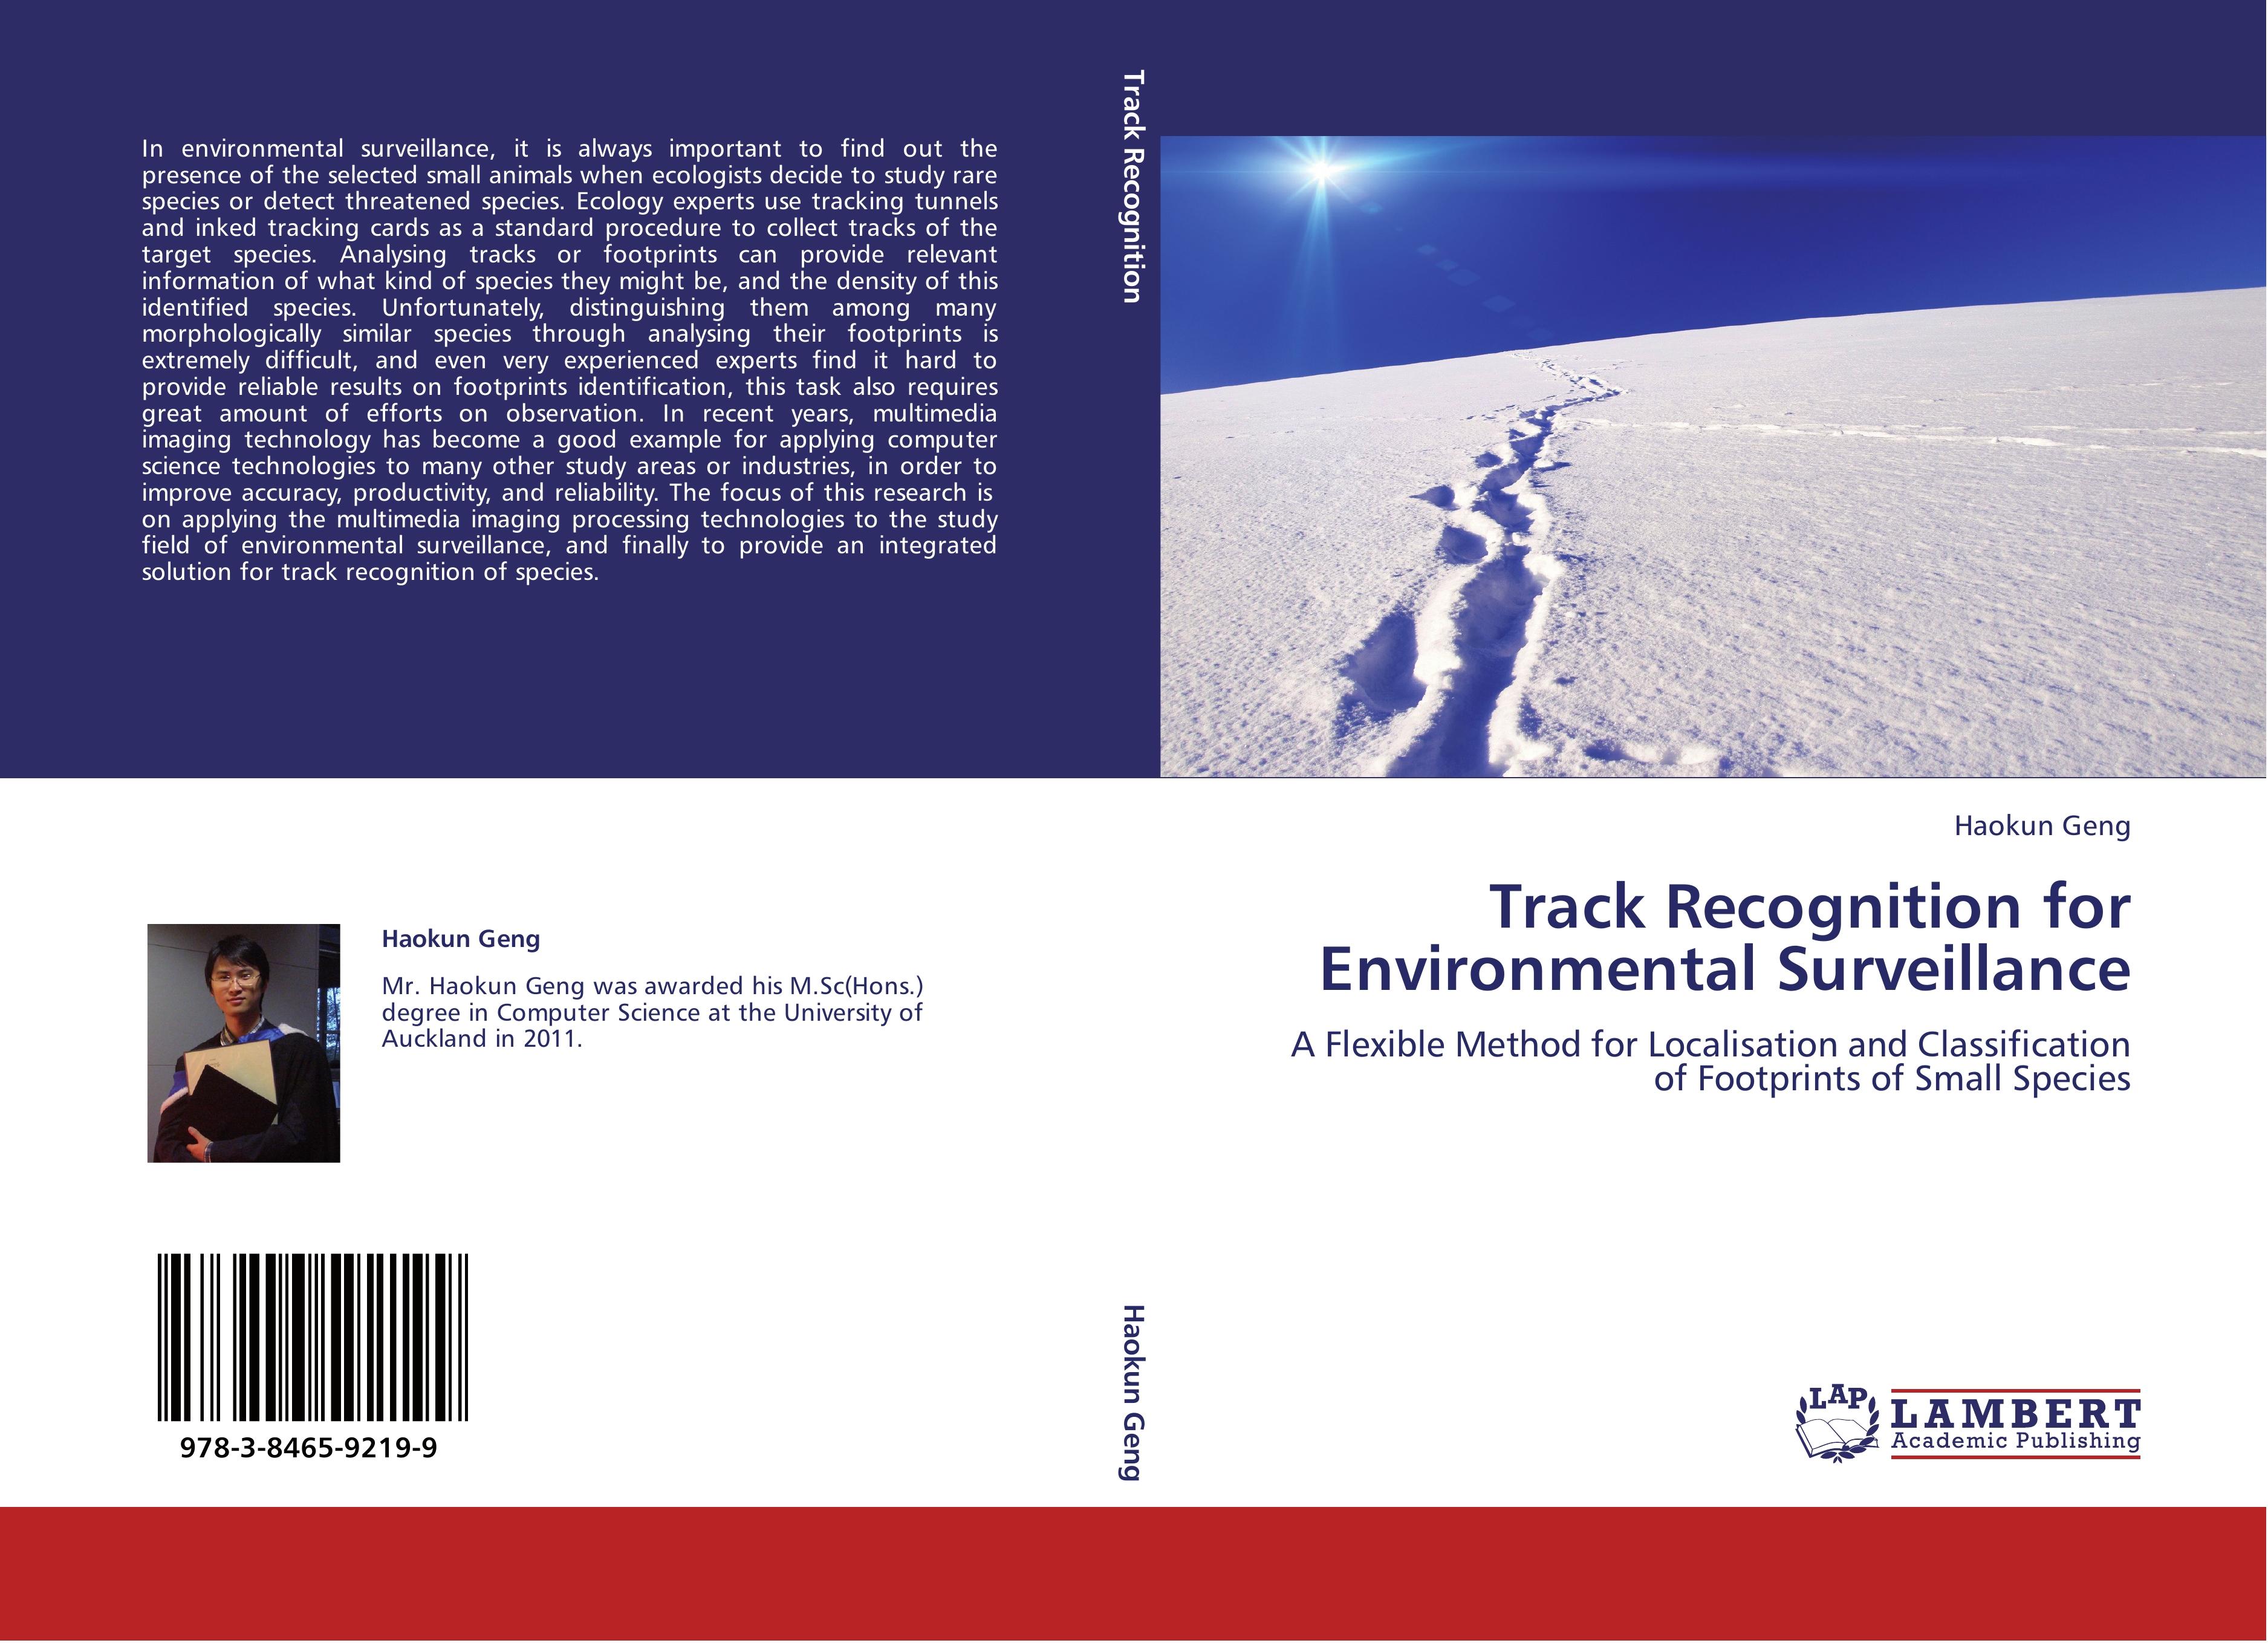 Track Recognition for Environmental Surveillance - Haokun Geng